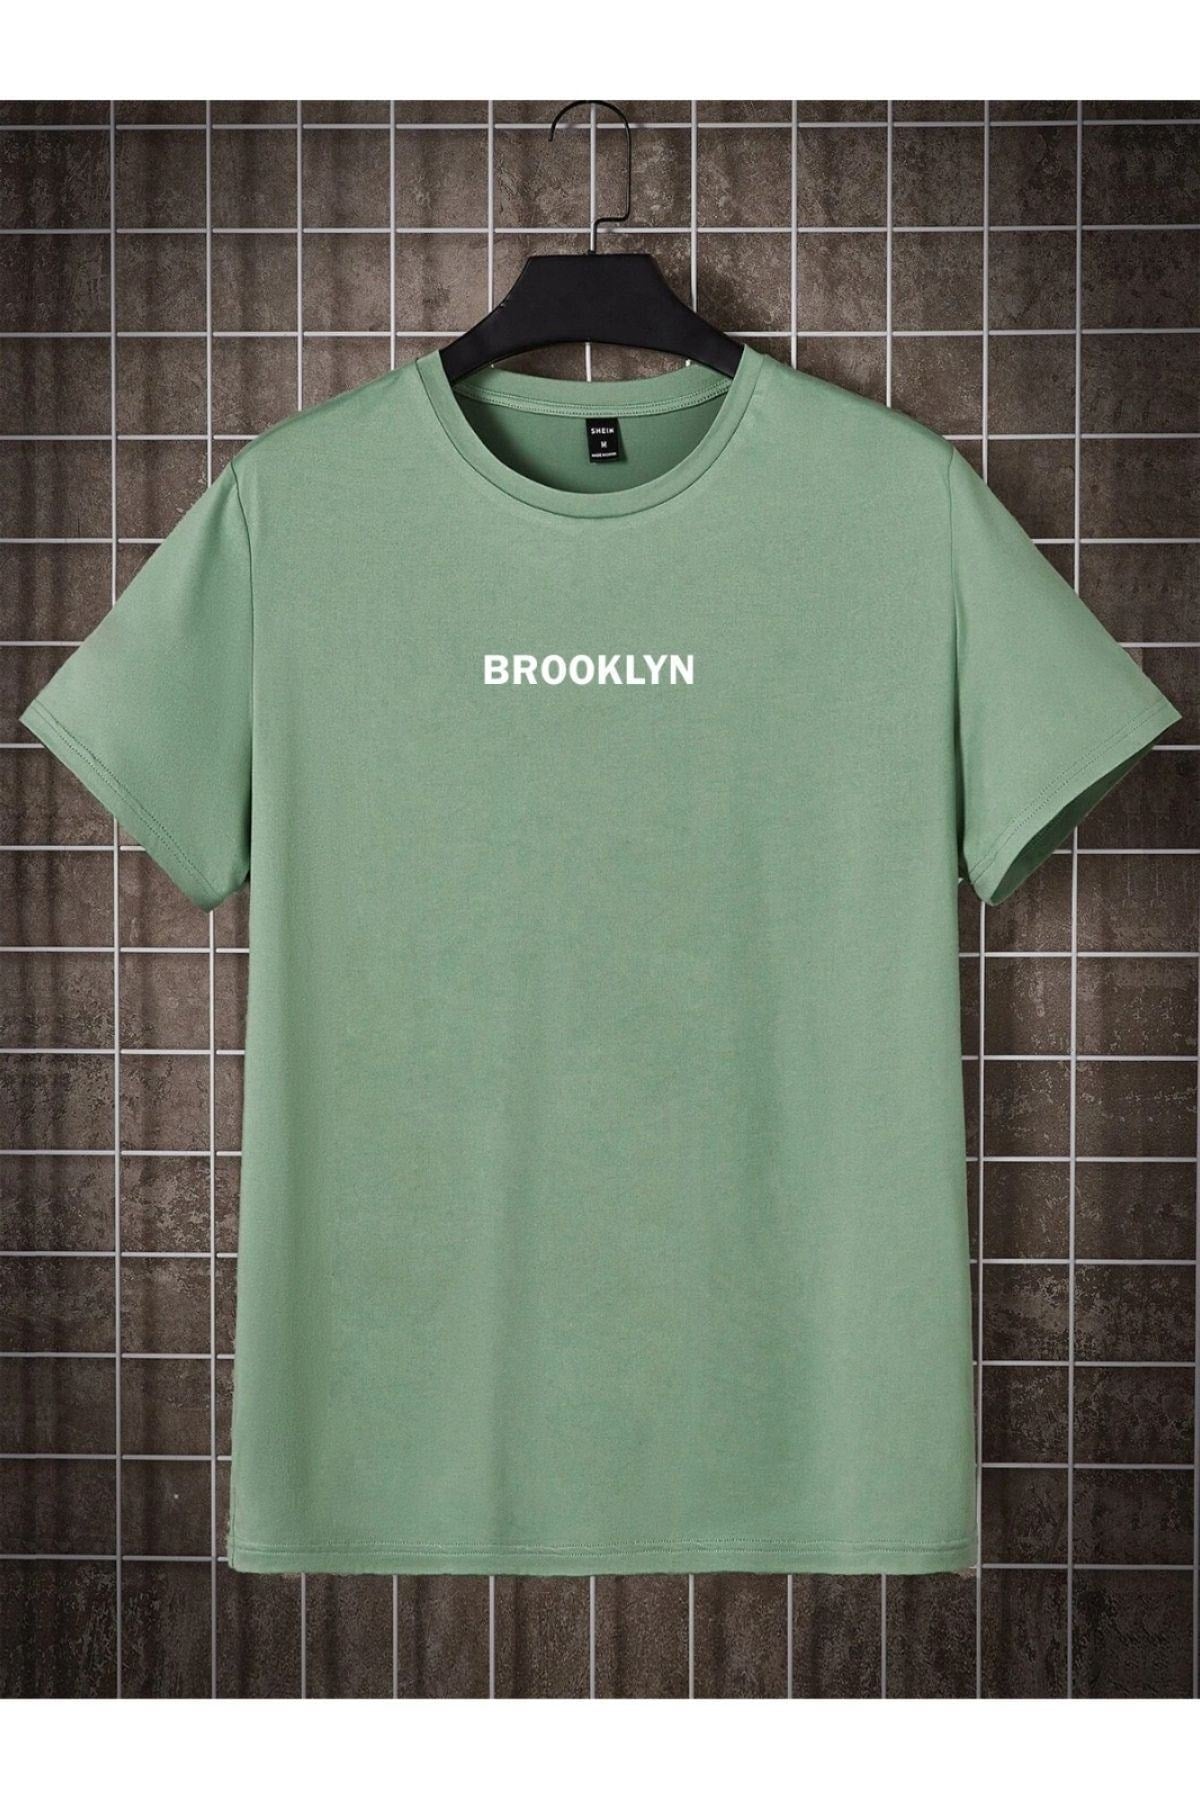 Black Street Men's Mint Green Brooklyn Printed Oversize Crew Neck Short Sleeved Tshirt